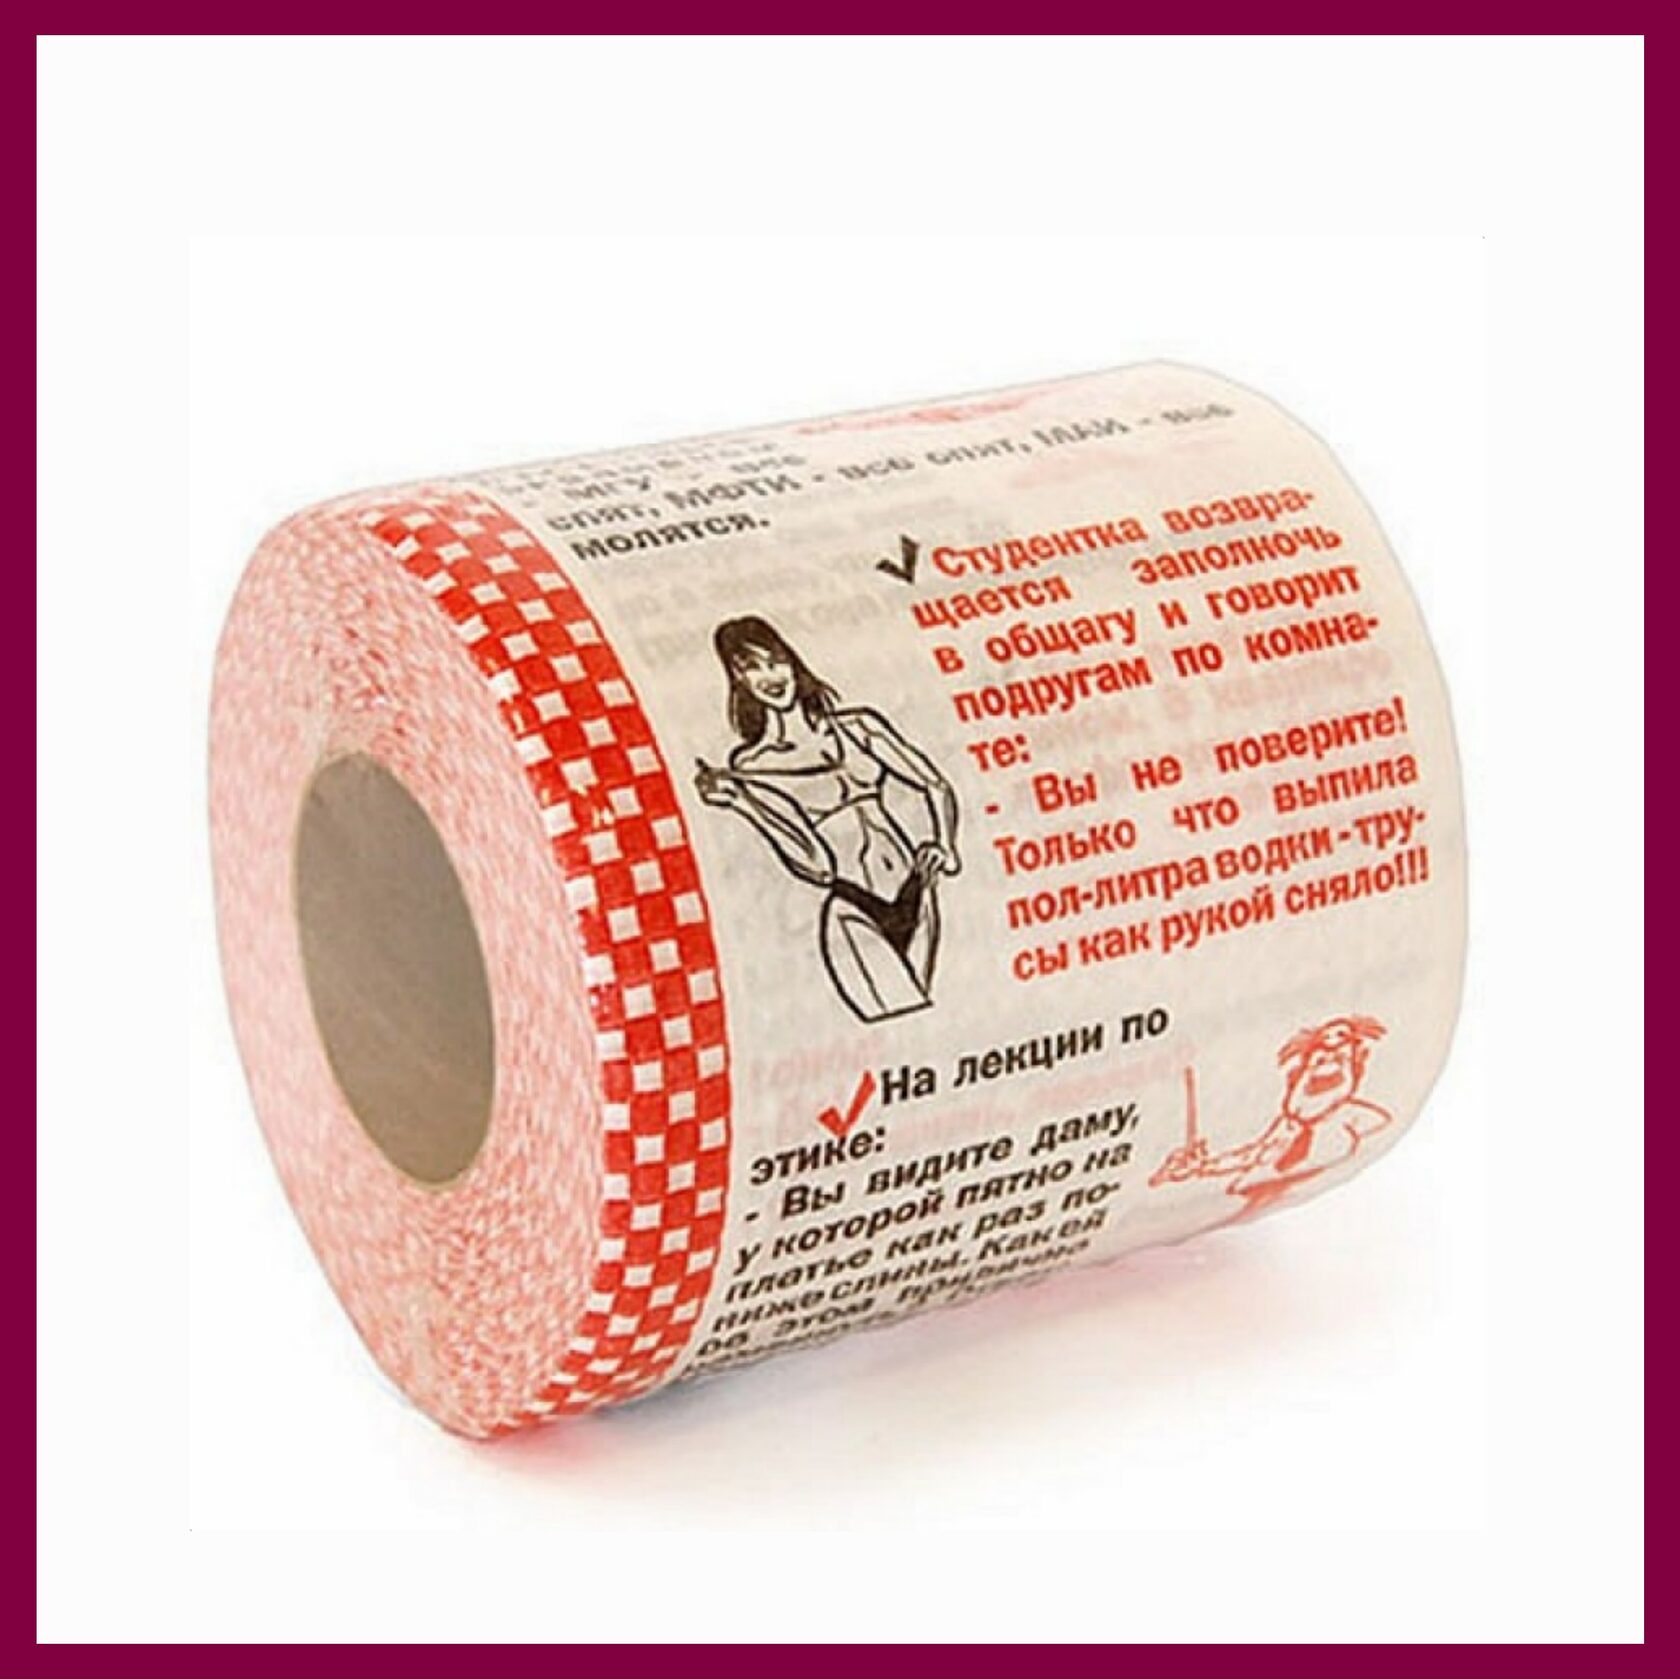 Анекдот про туалетную бумагу. Туалетная бумага с анекдотами. Туалетная бумага 150 м. Туалетная бумага в СССР.